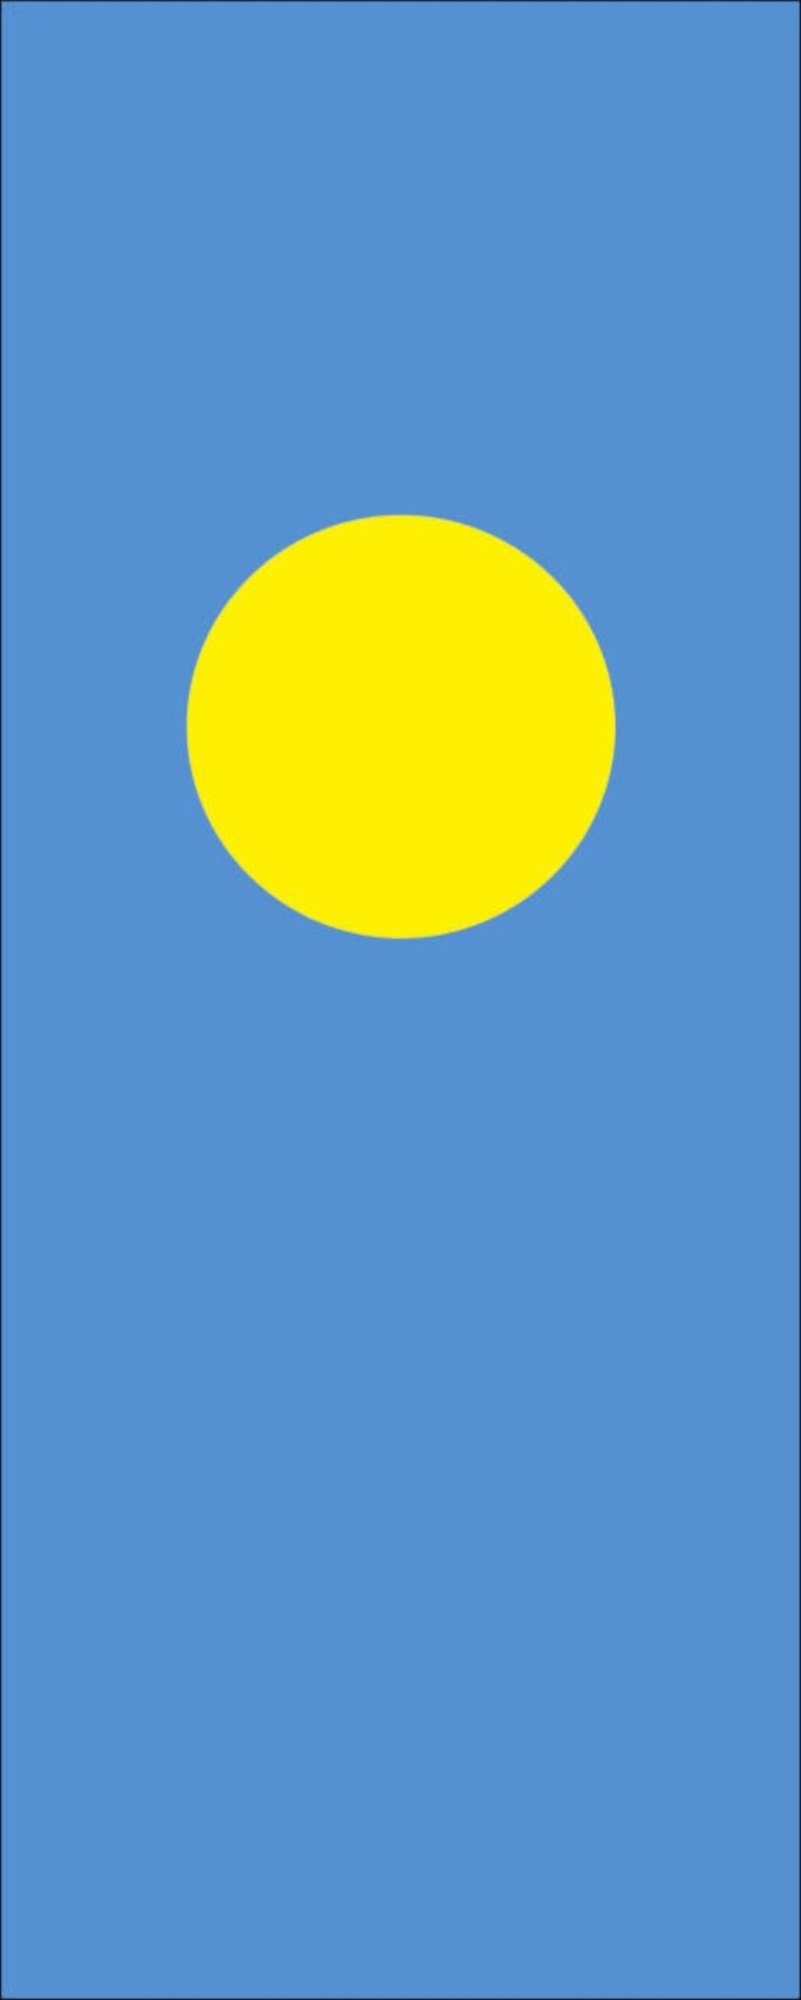 Flagge Hochformat Flagge g/m² 110 flaggenmeer Palau